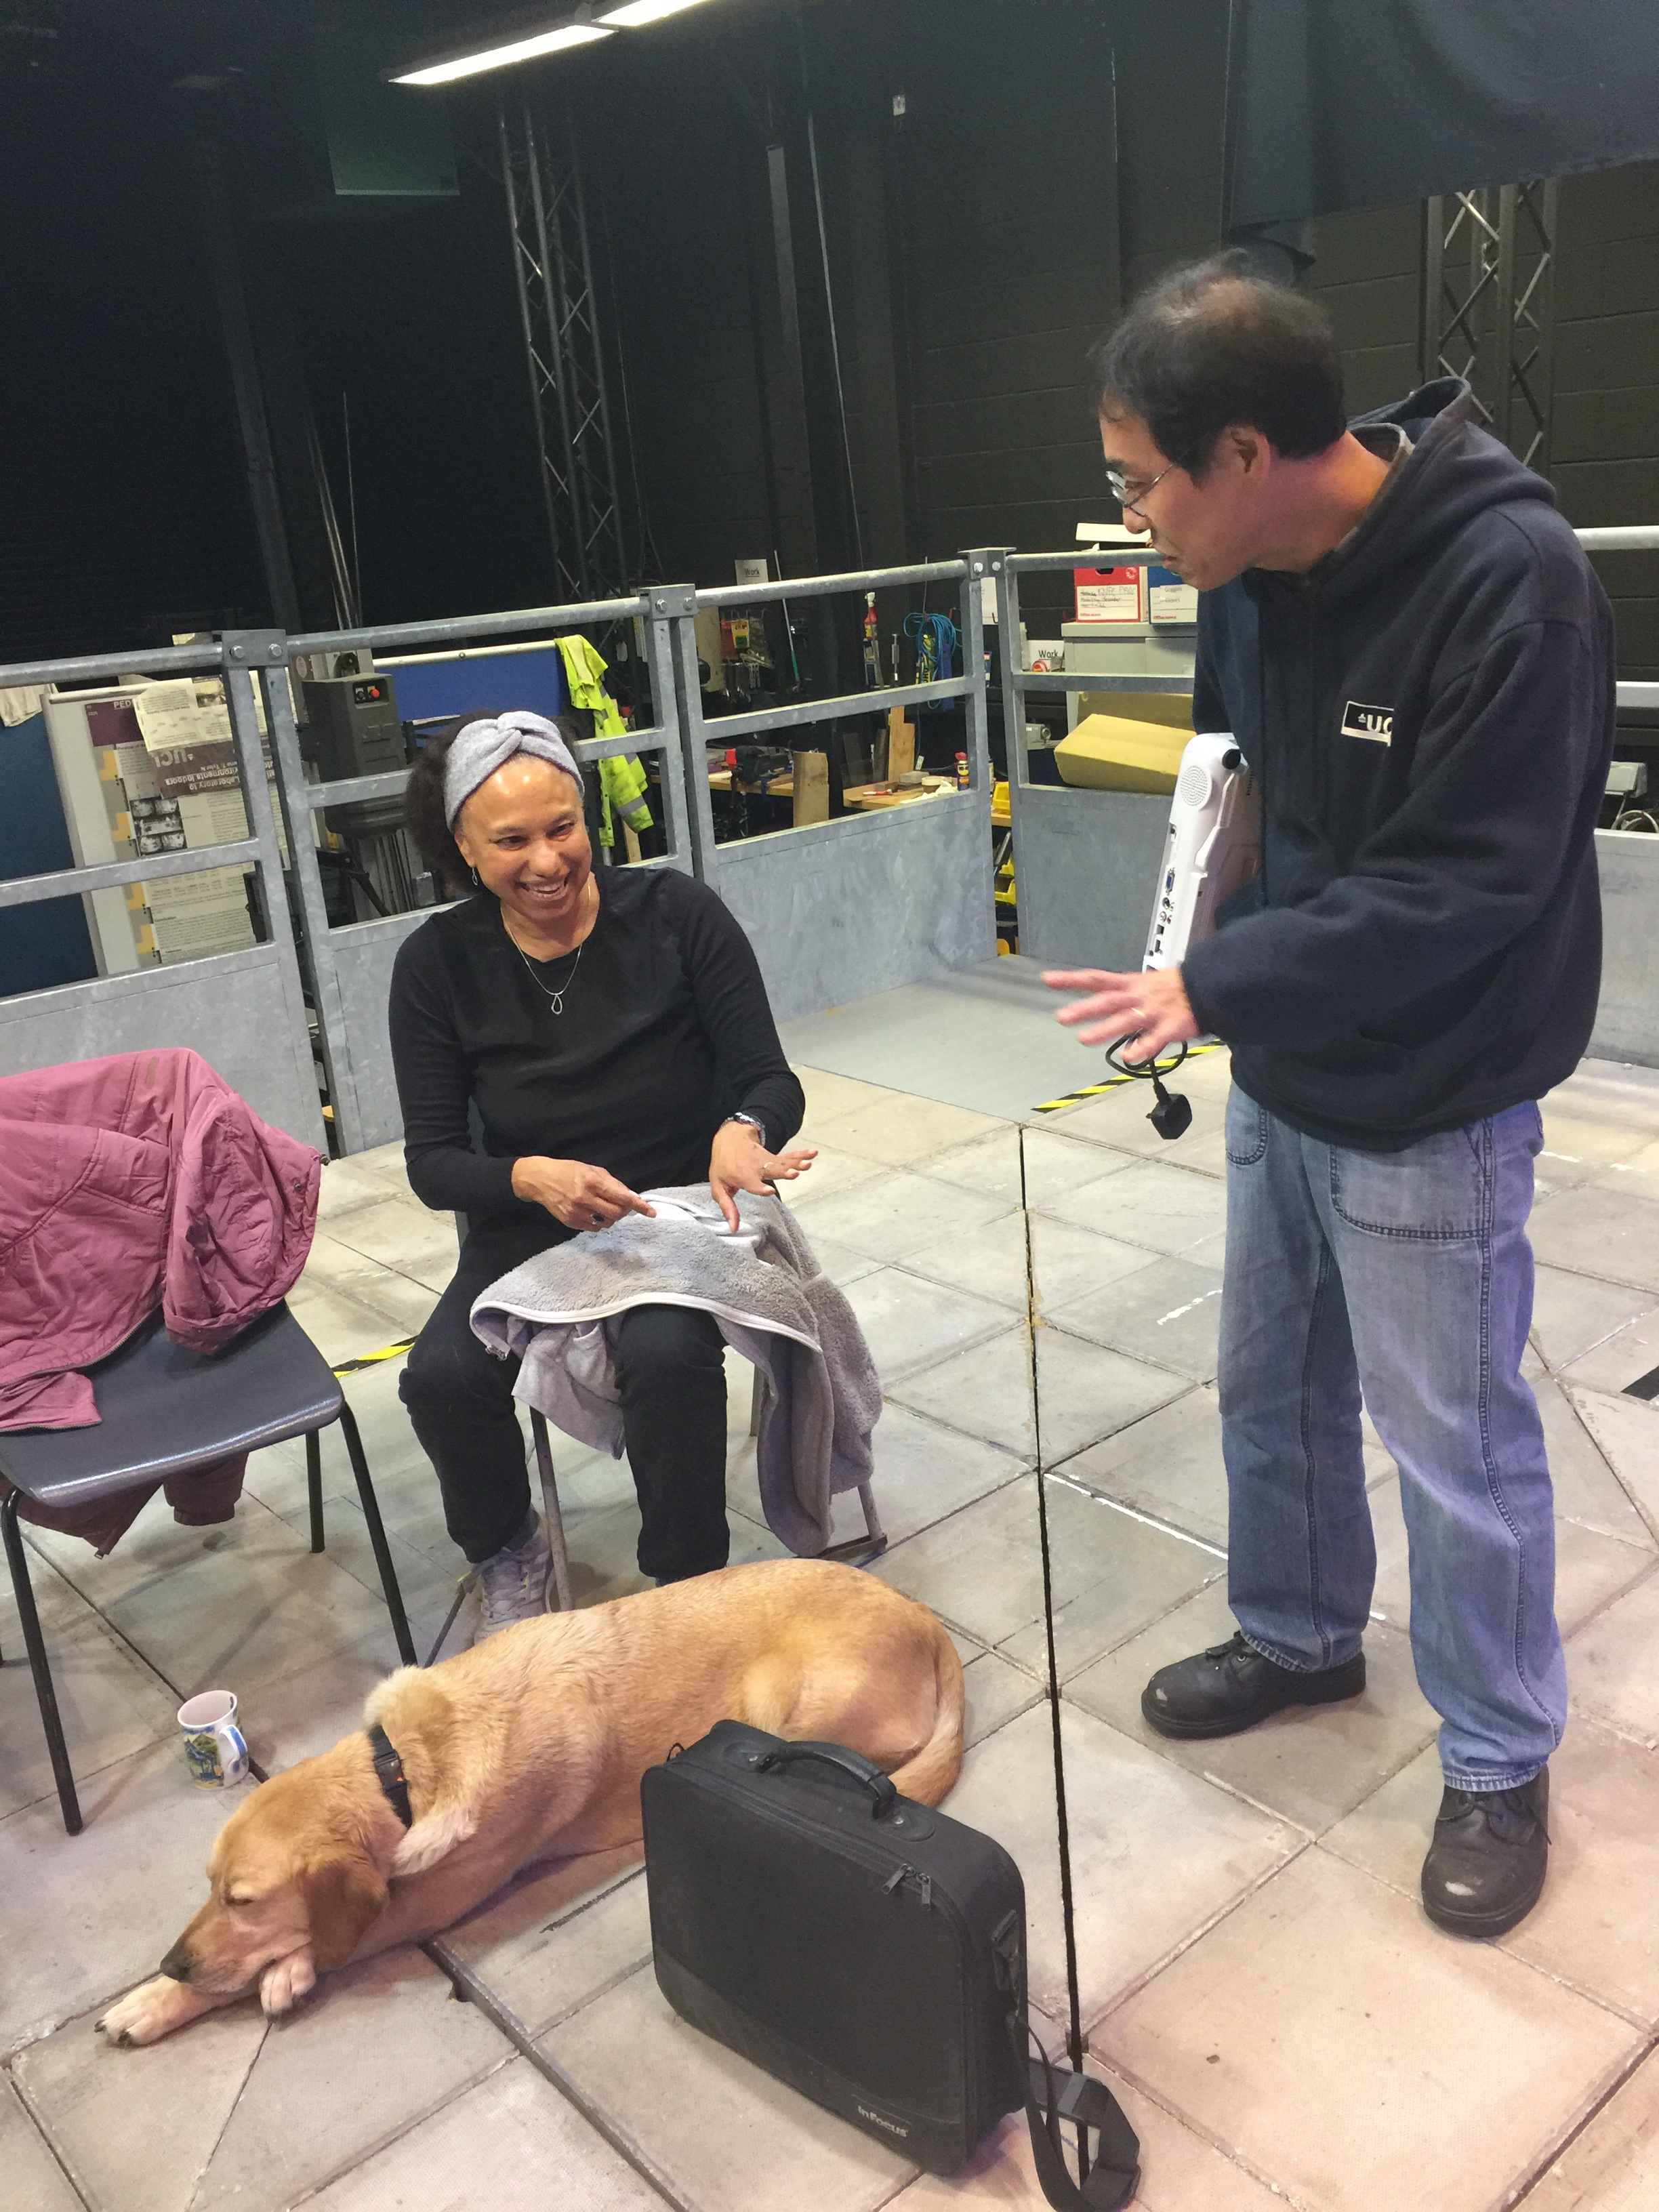 PAMELA technician Tatsuto Suzuki offers a projector to Maria, sitting on platform laughing